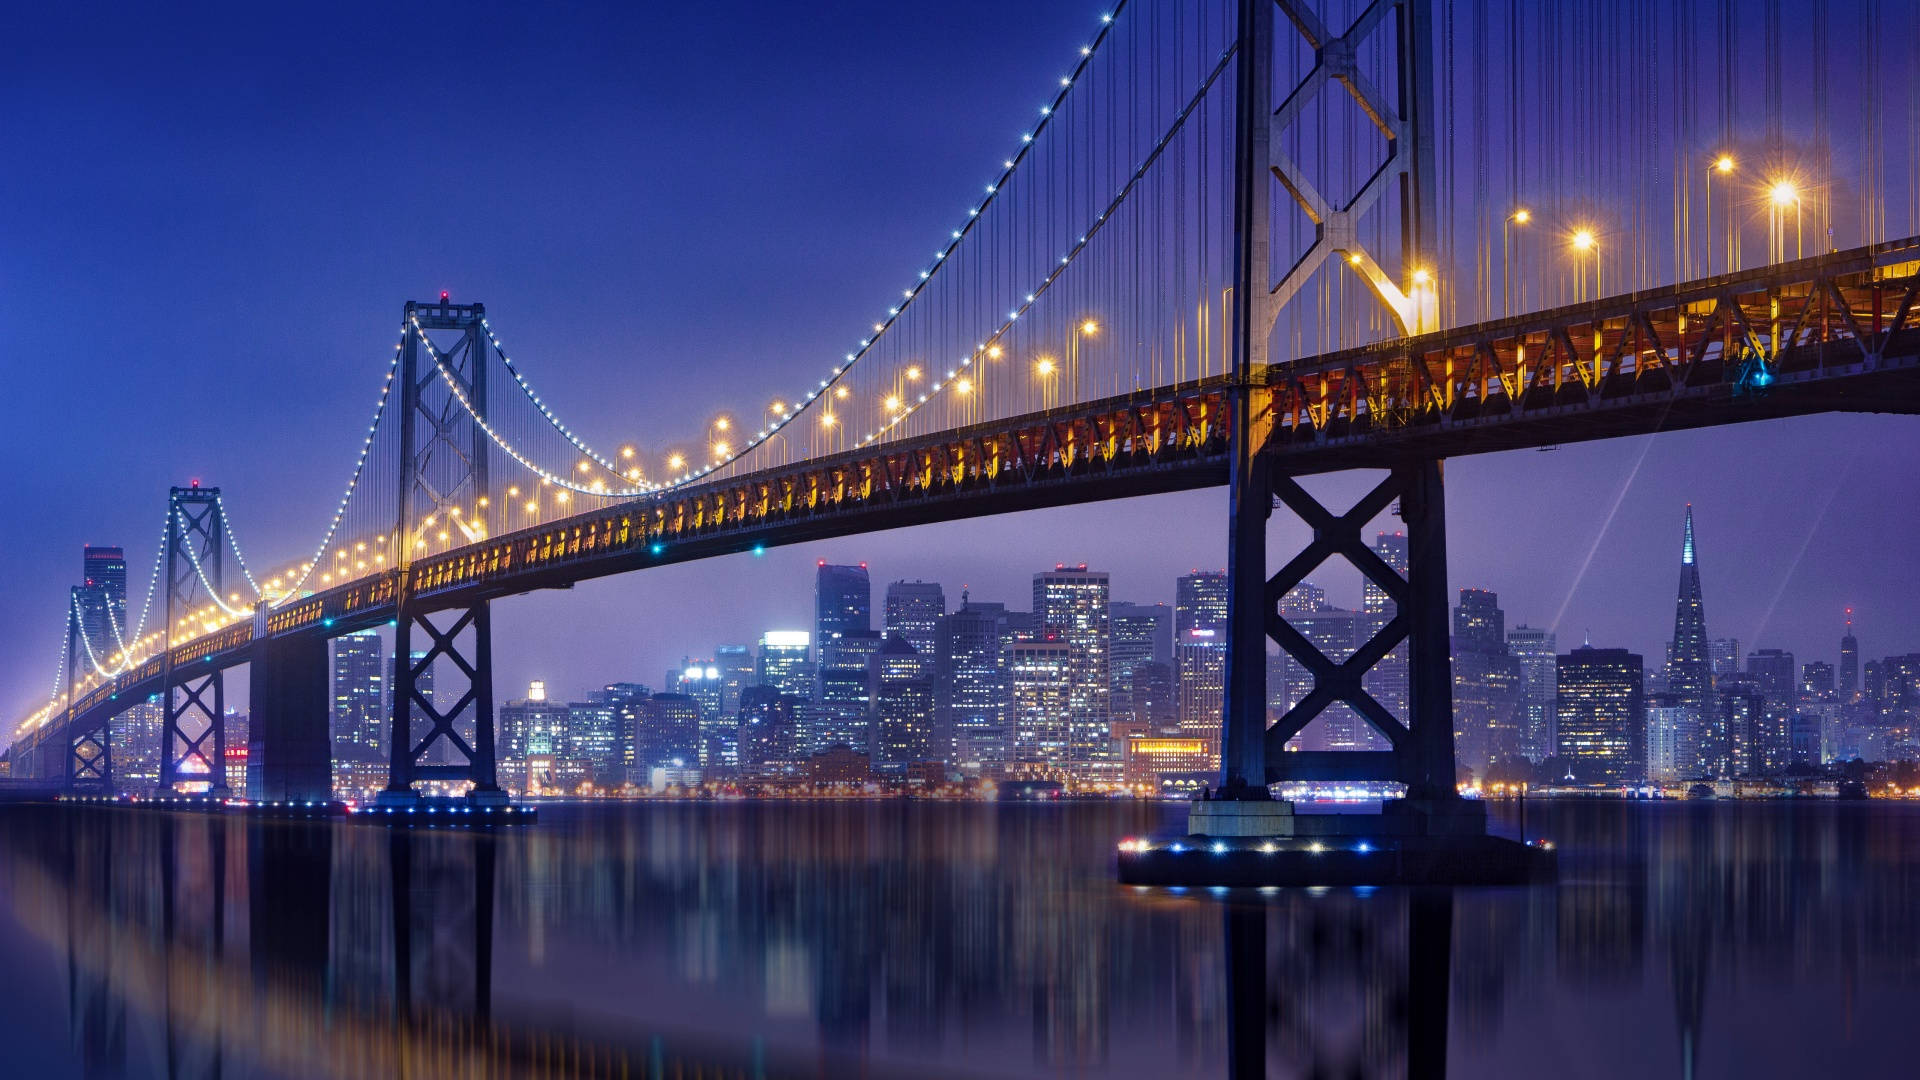 "Explore the beauty of San Francisco" Wallpaper